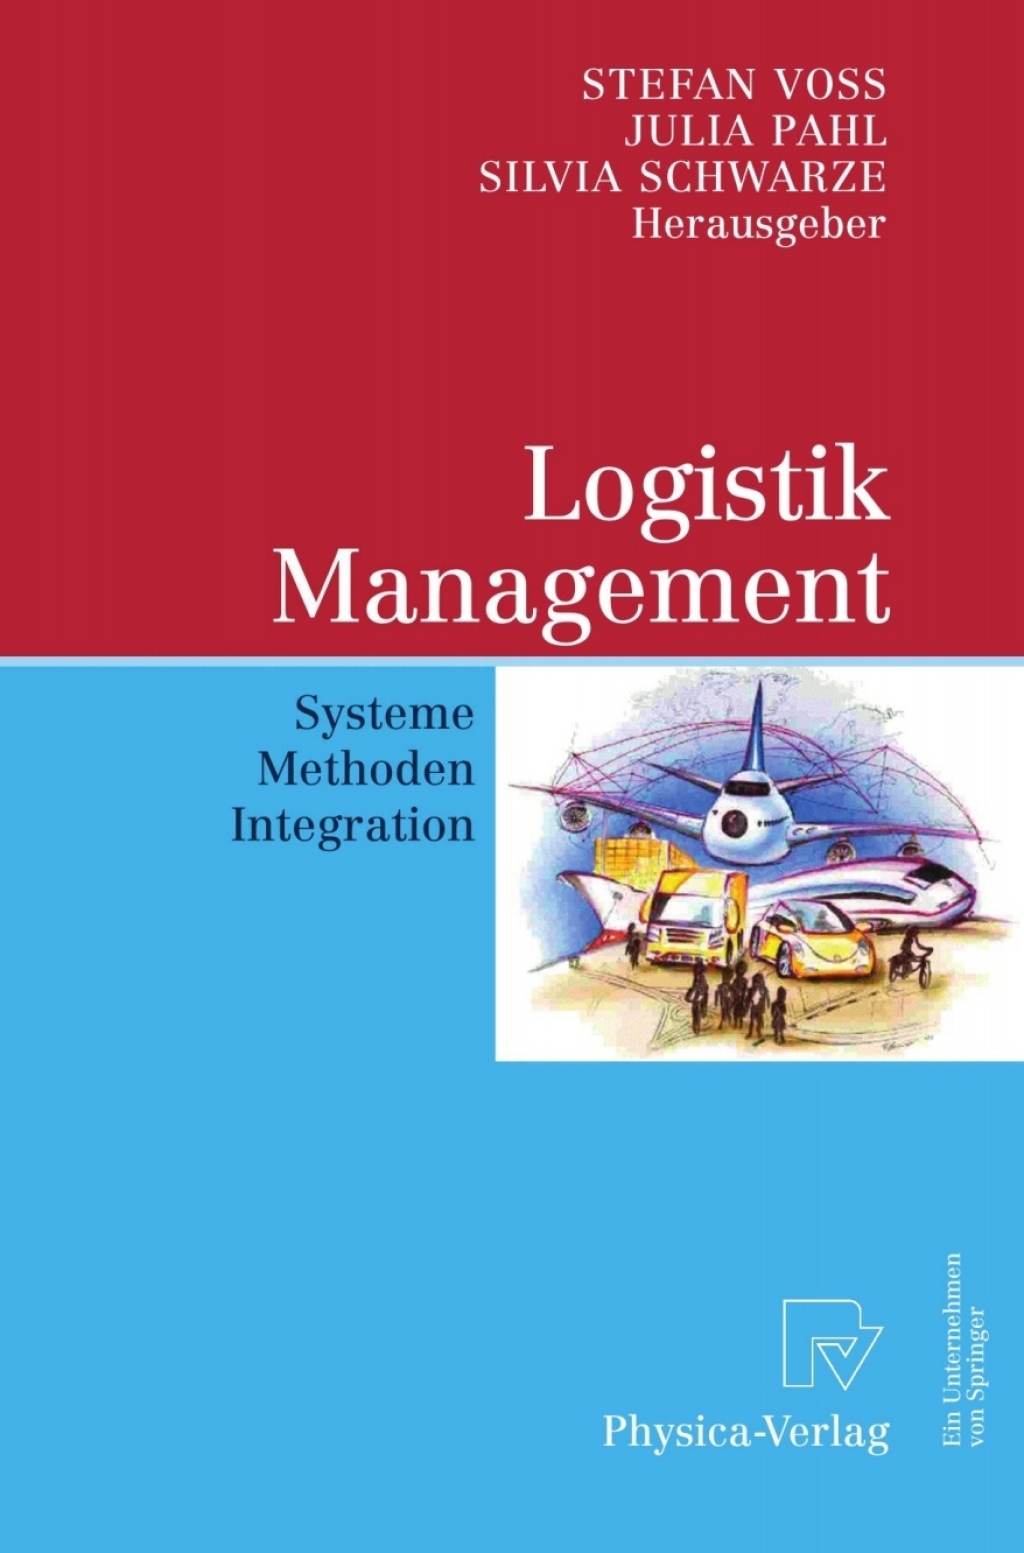 ISBN 9783790823615 product image for Logistik Management - 1st Edition (eBook Rental) | upcitemdb.com